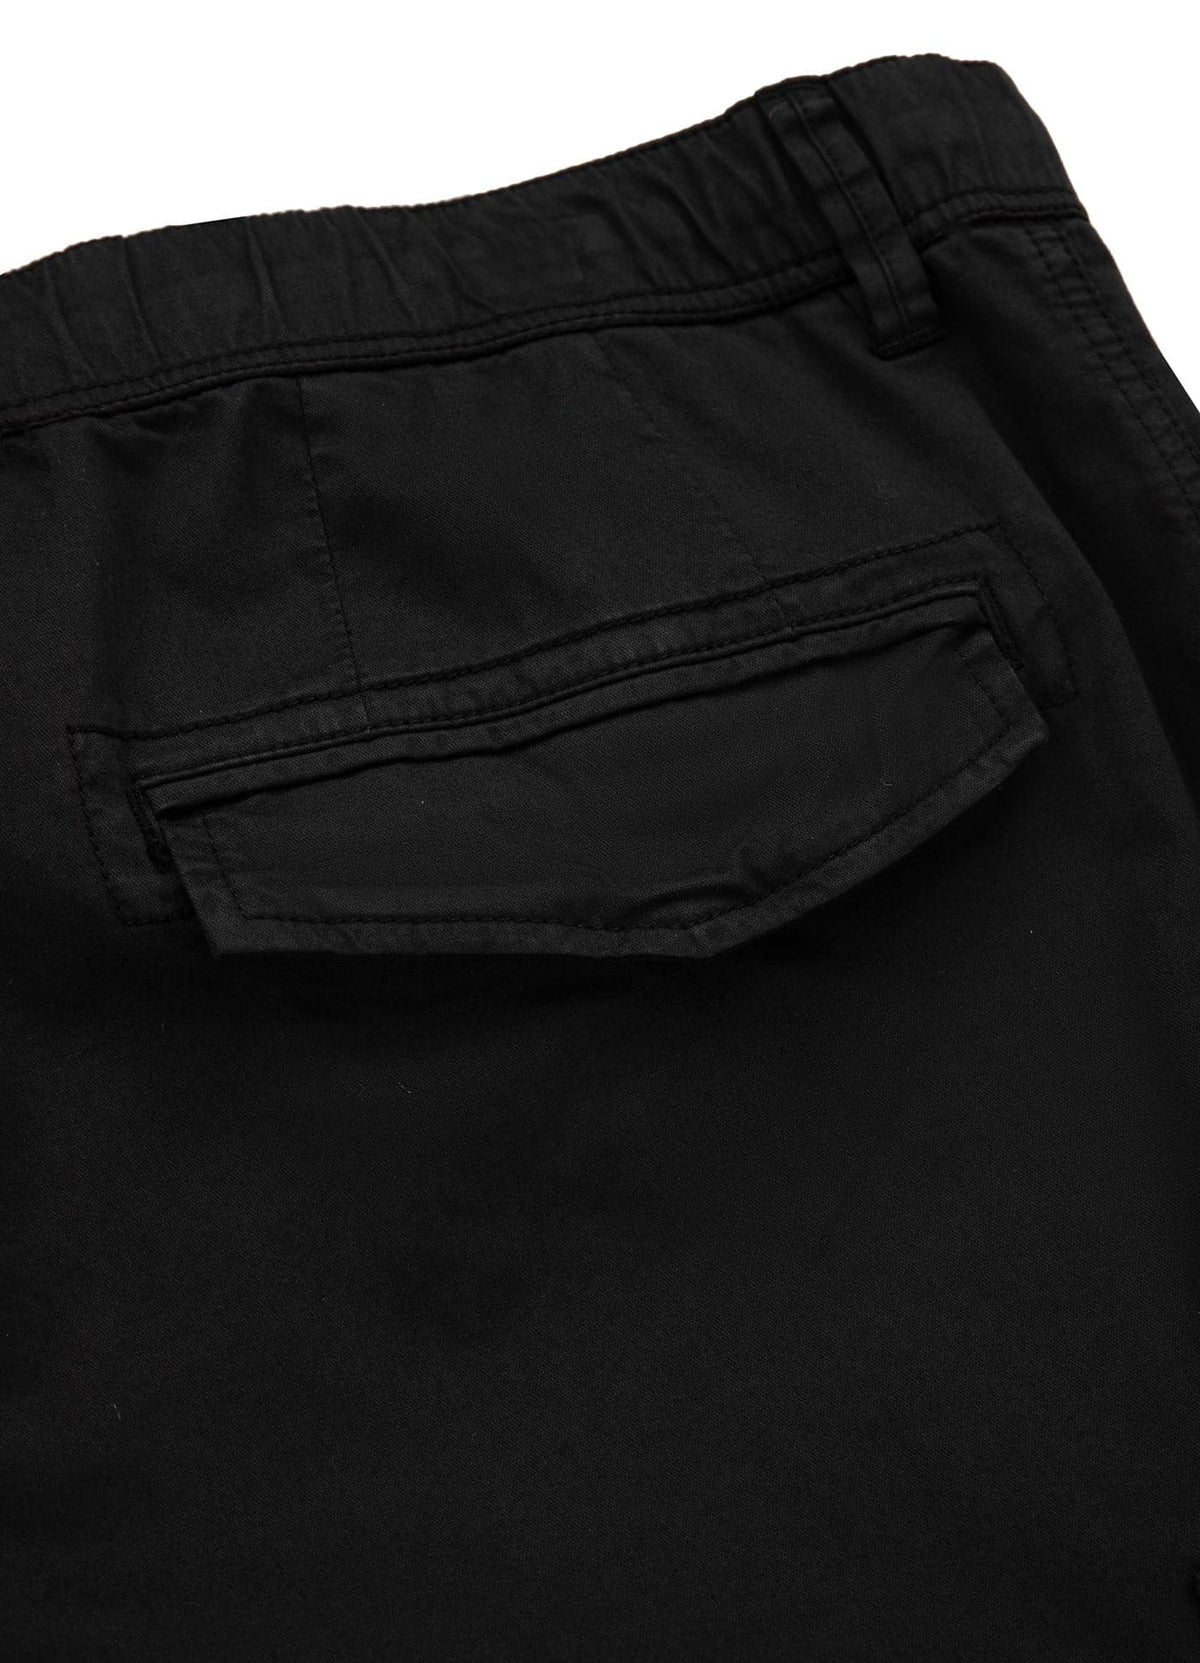 ARAGON Black Cargo Shorts